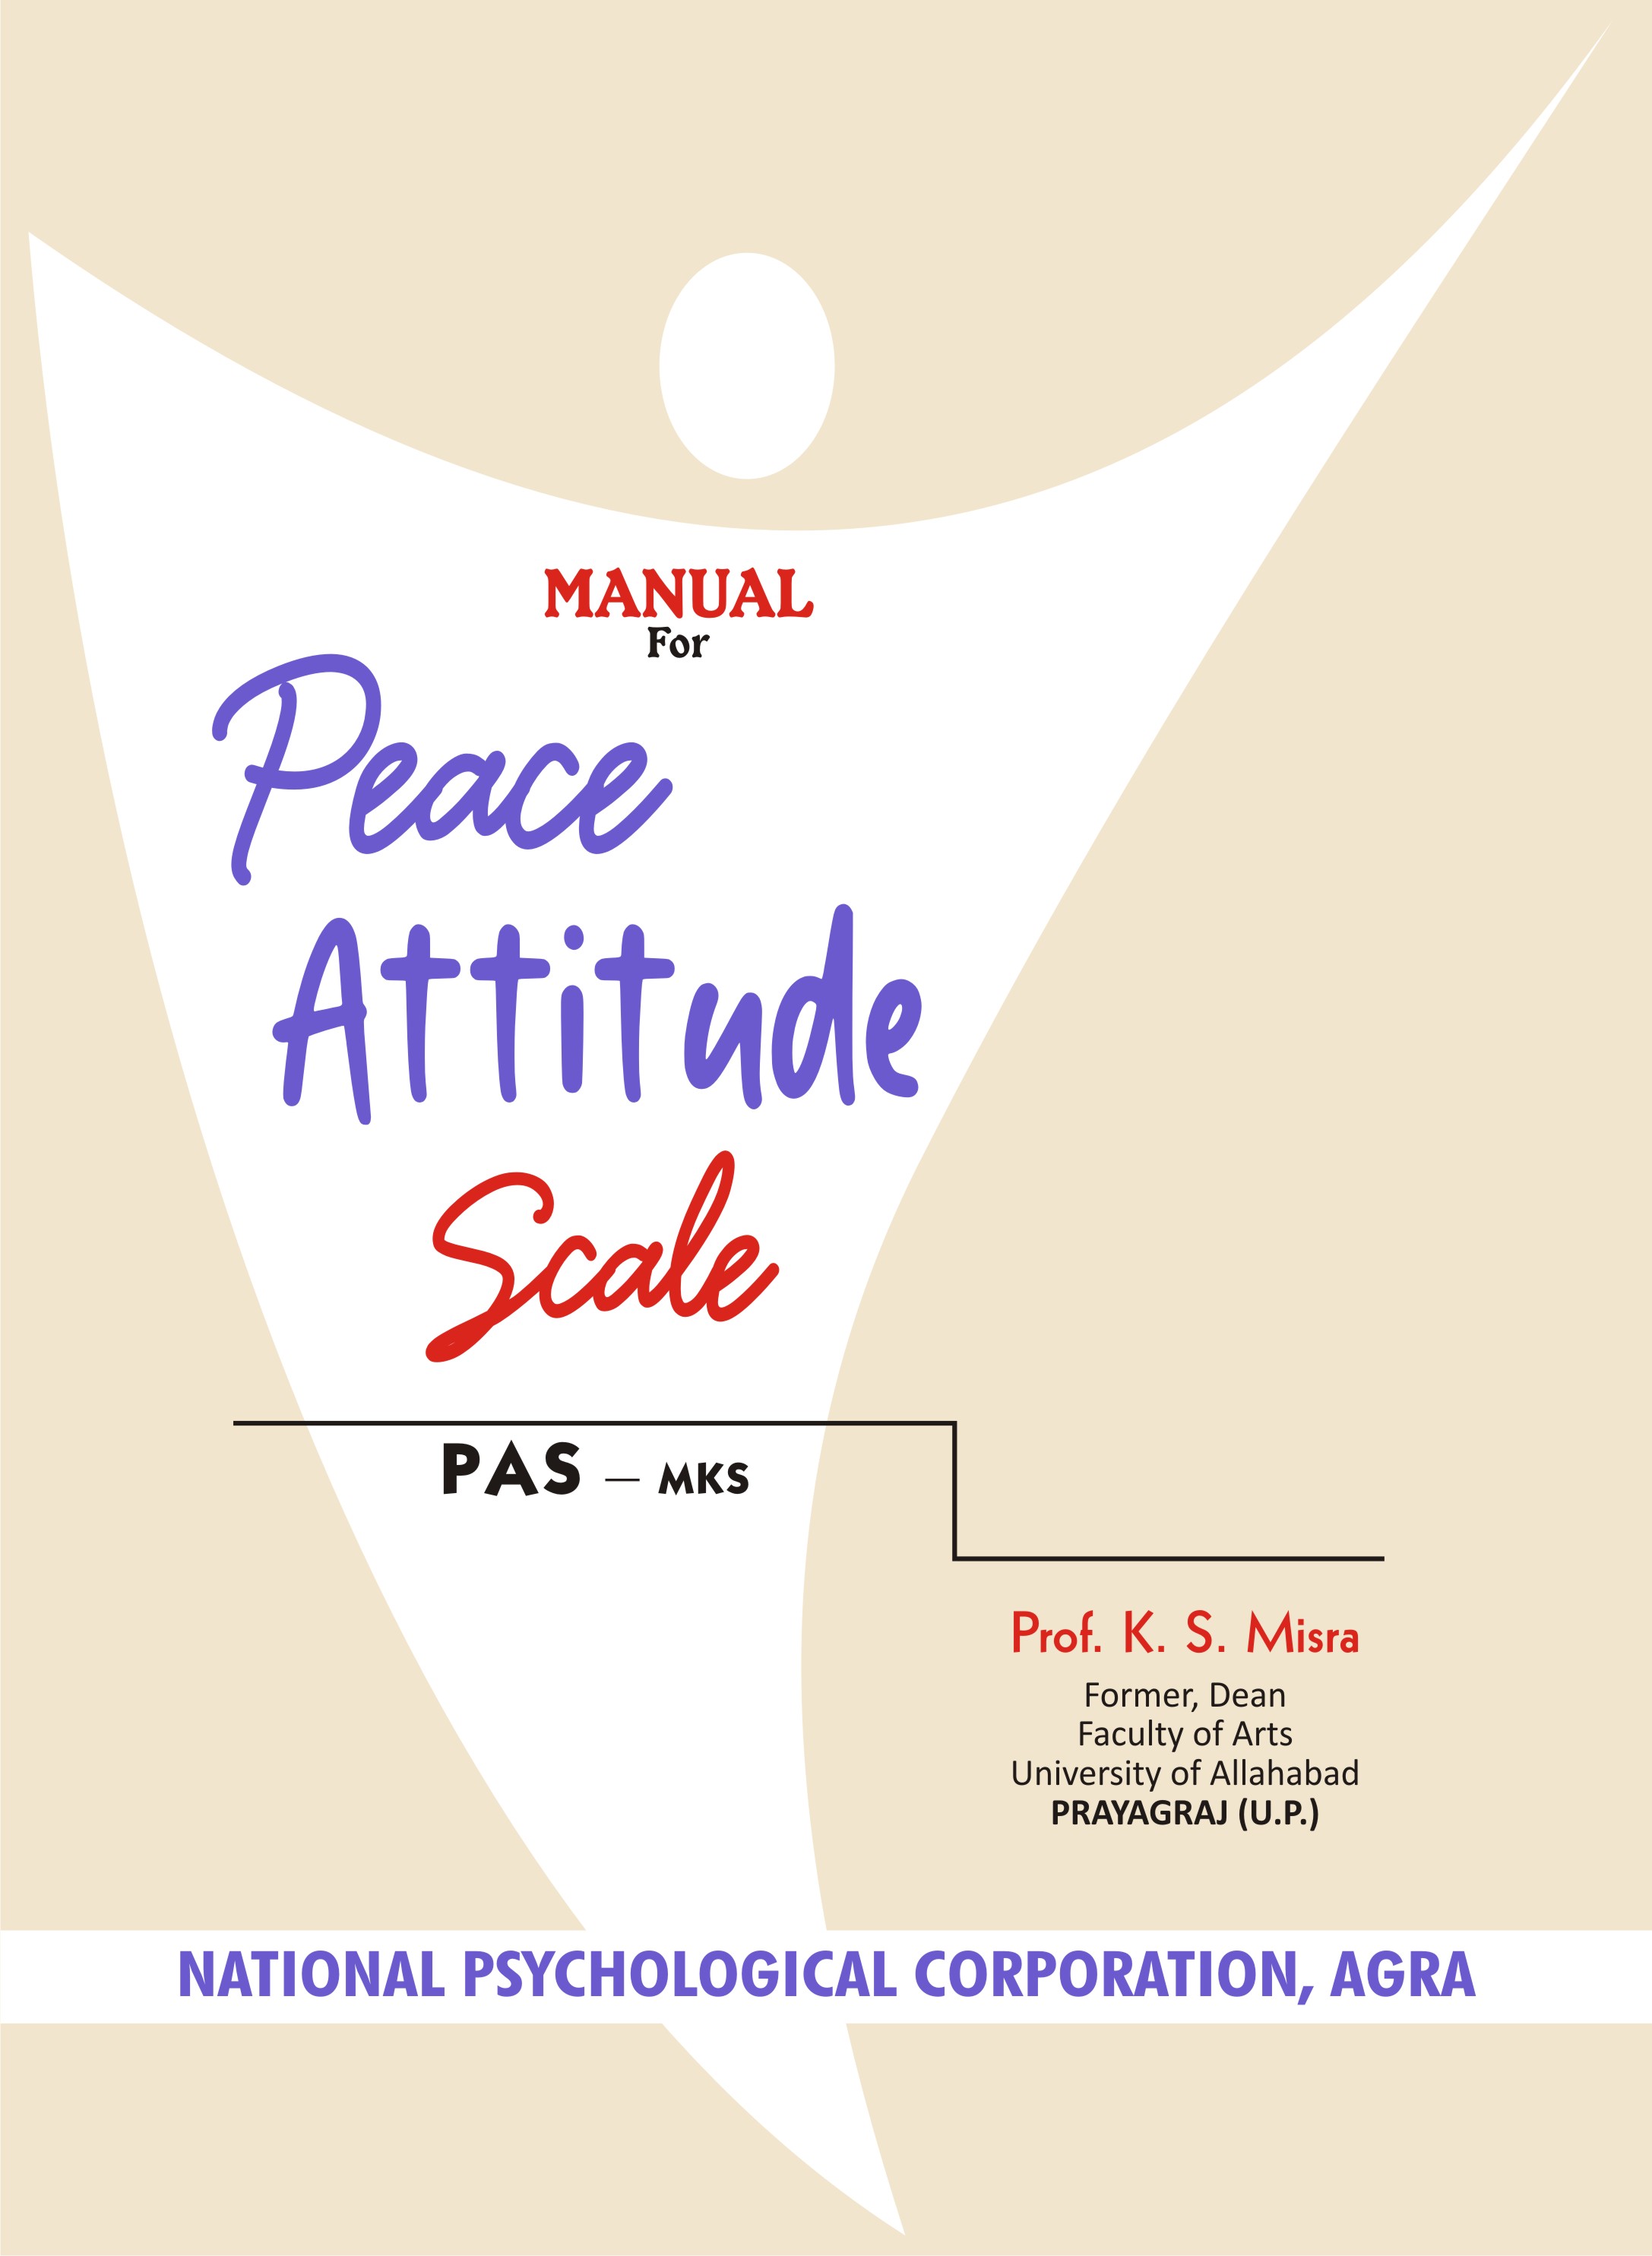 PEACE-ATTITUDE-SCALE